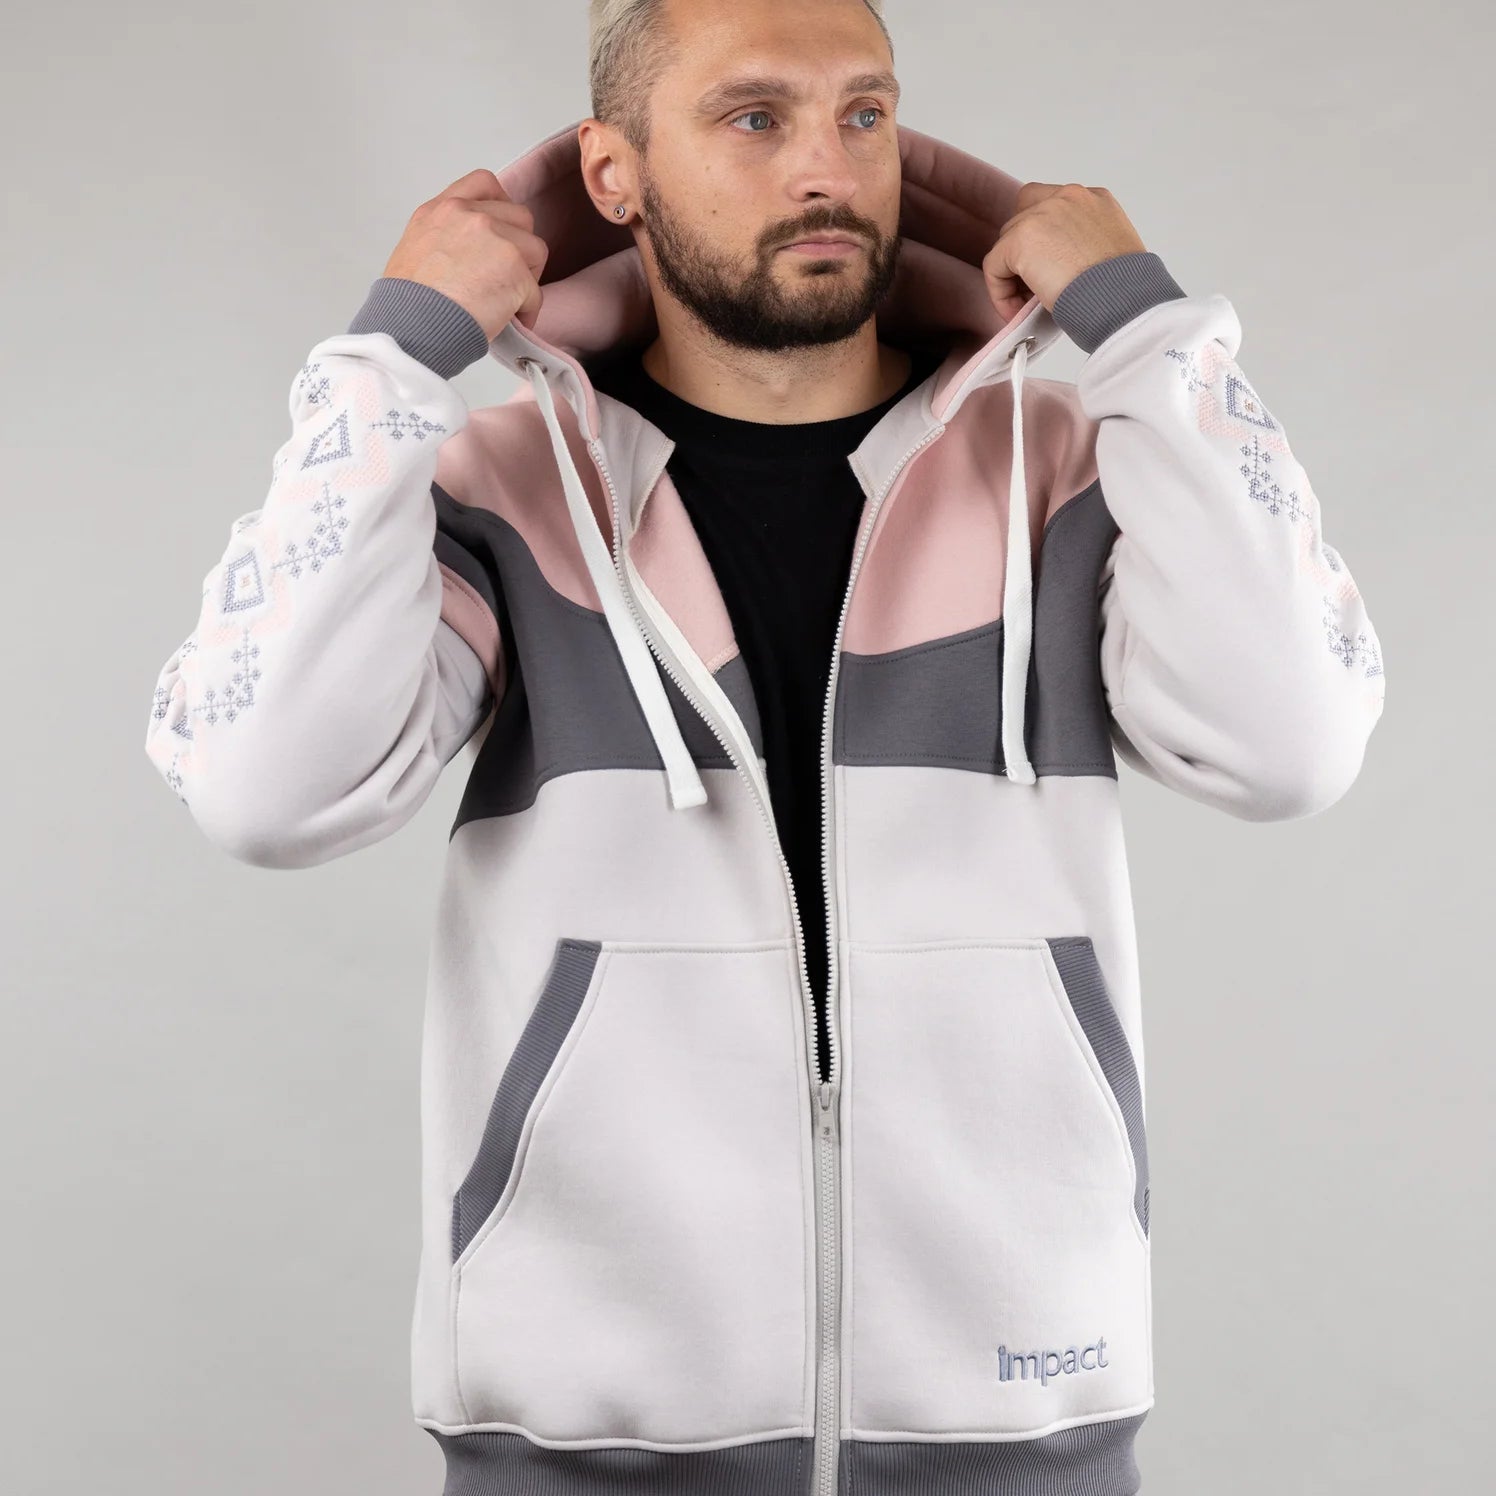 Chic and Comfortable Zip-up hoodie “Sunrise”, Ukrainian vyshyvanka style. Ivory/Pink